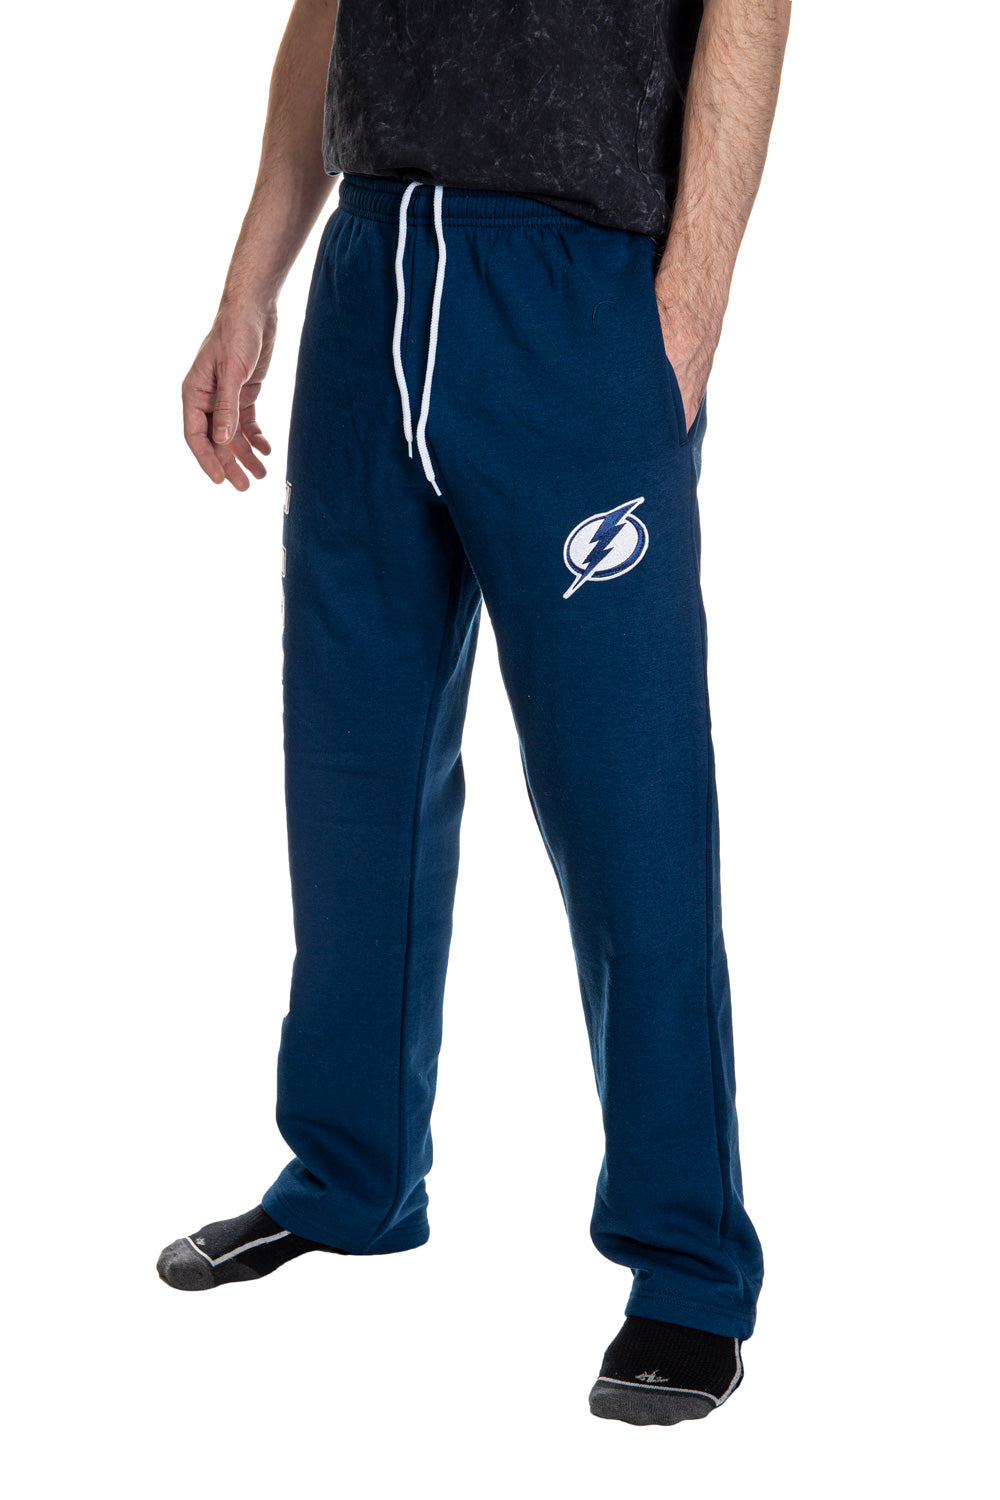 Tampa Bay Lightning Premium Fleece Sweatpants Side View of Embroidered Logo.